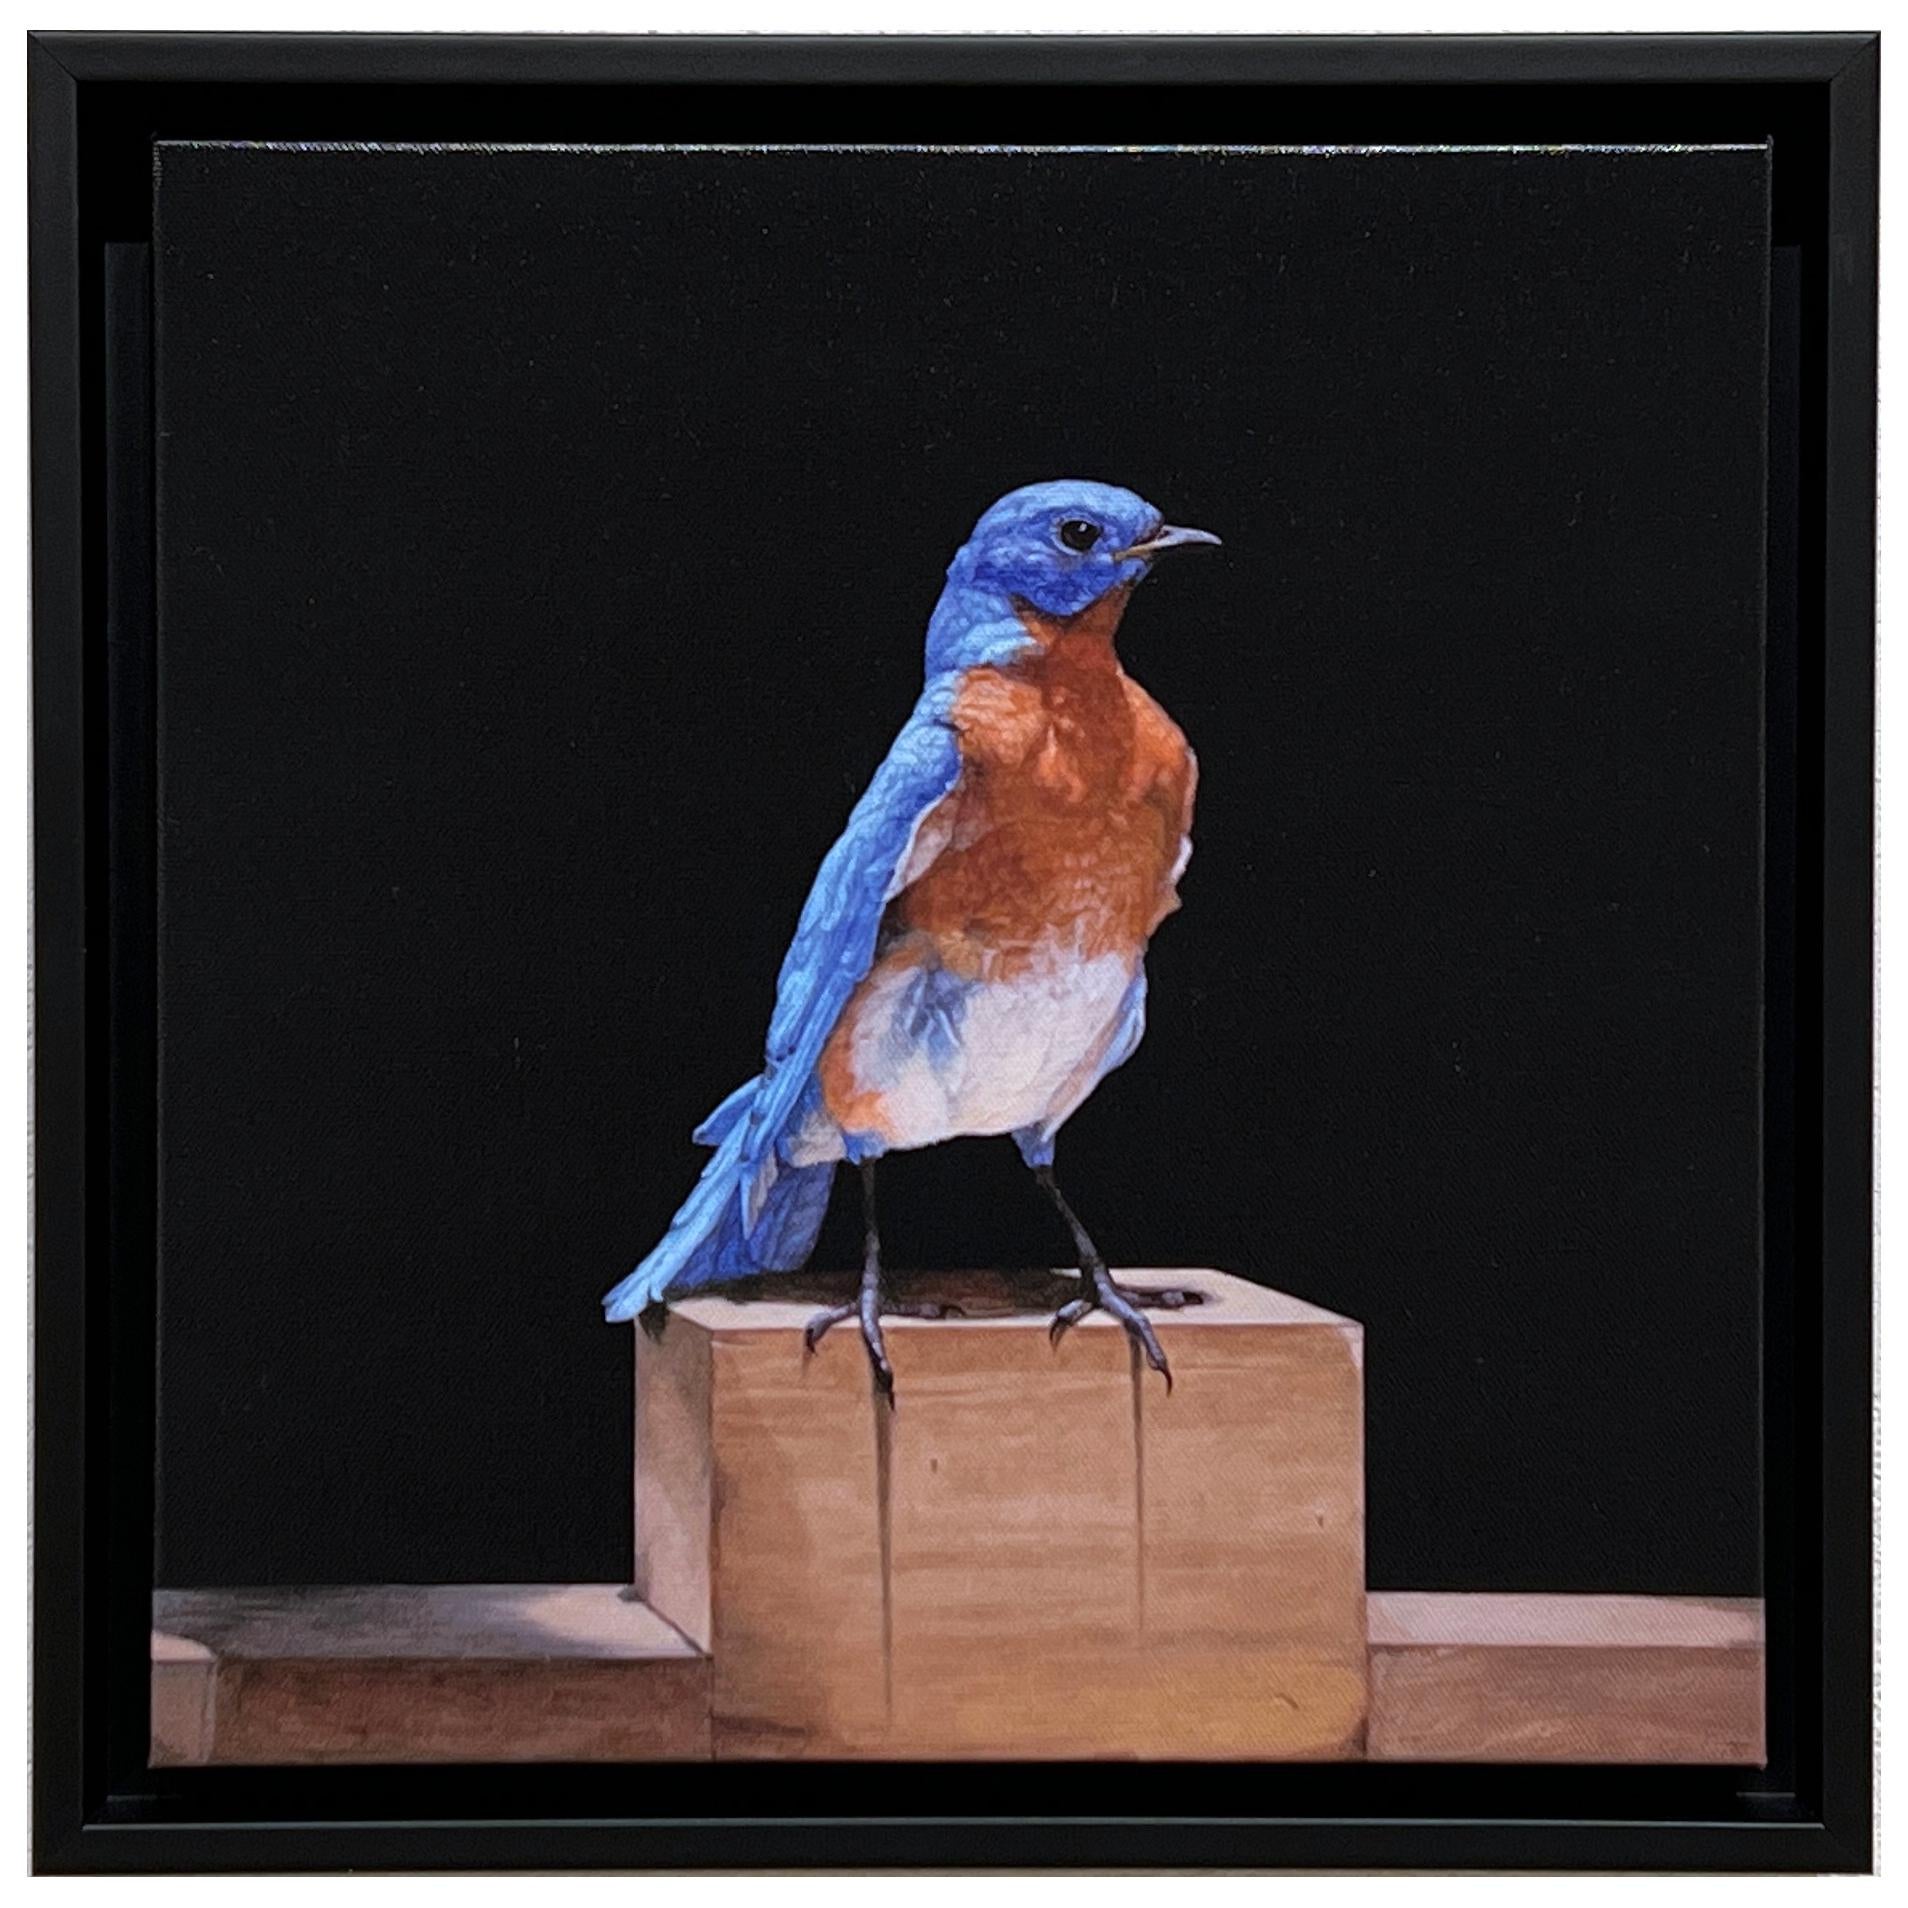 Animal Print Patricia Traub - EASTERN BLUE BIRD - Contemporain / Photorealism / animal print